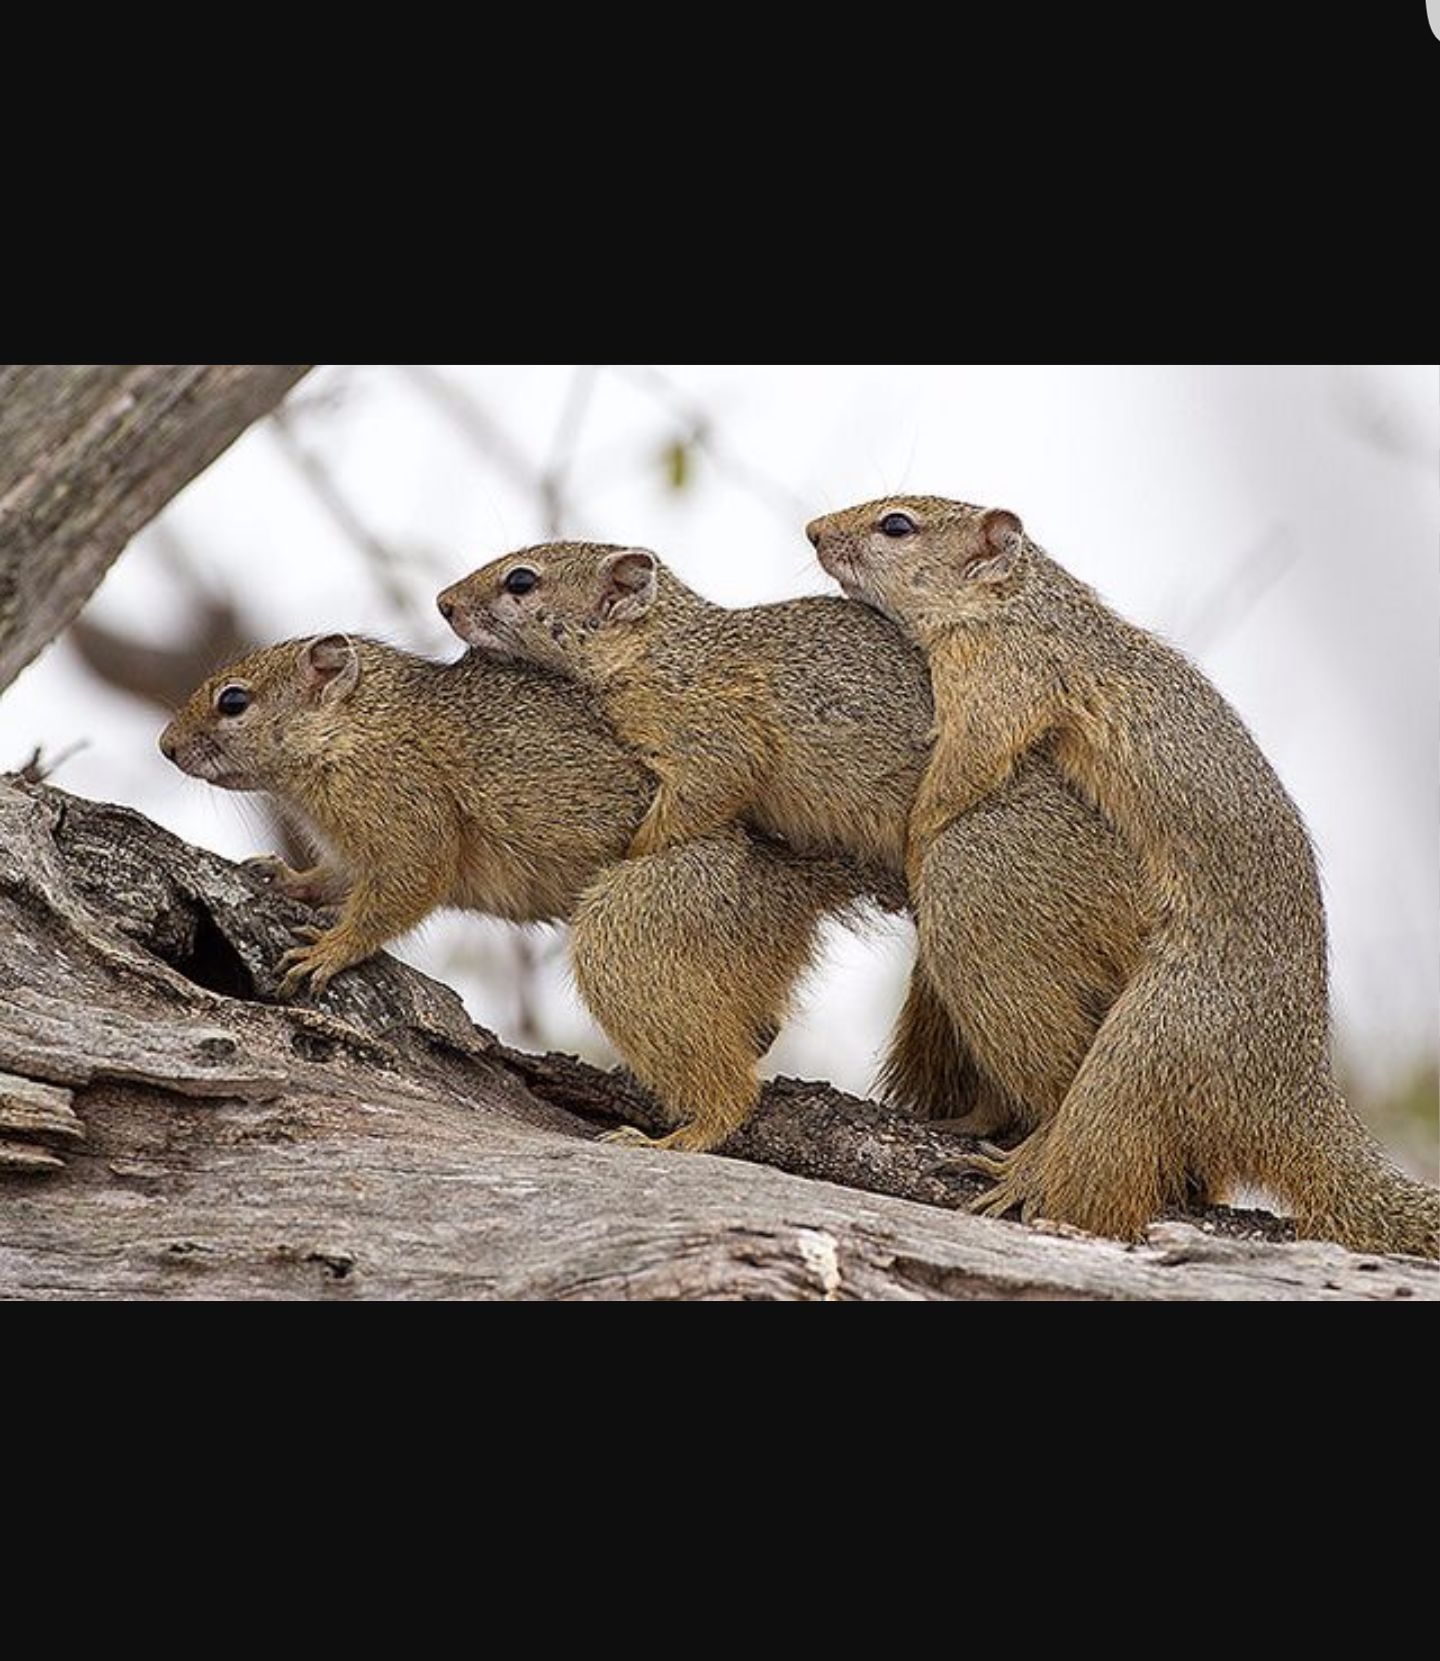 Squirrel threesome meme